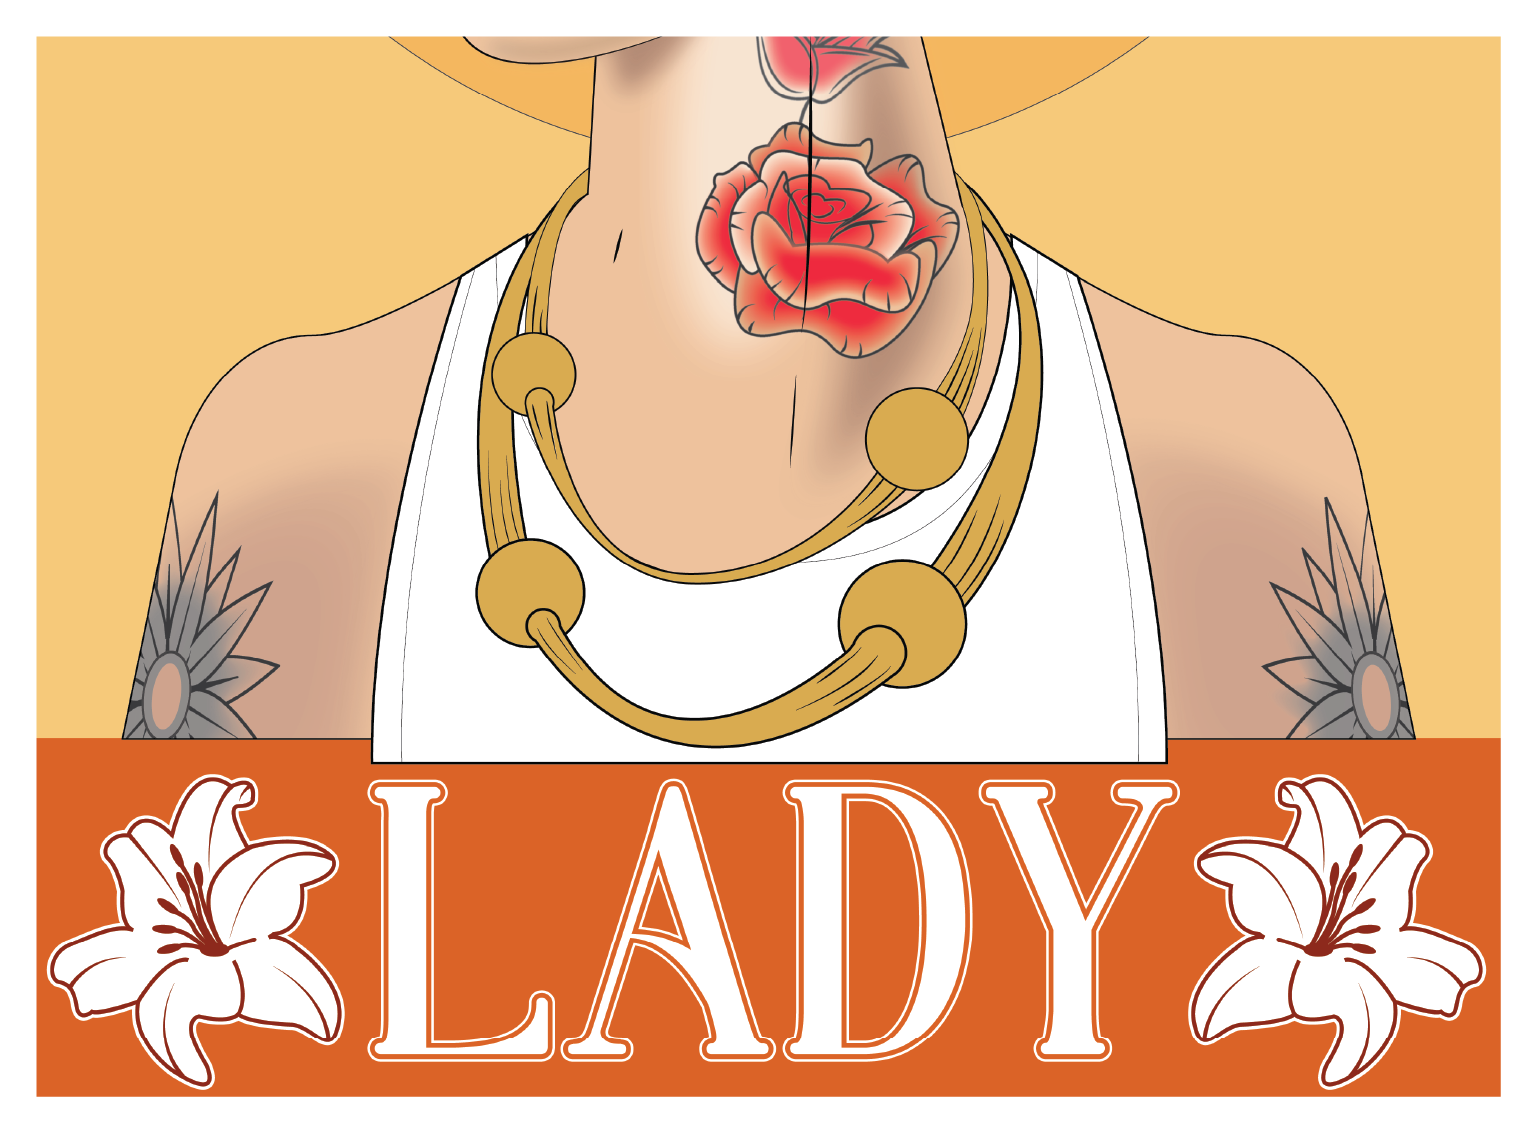 Lady 8